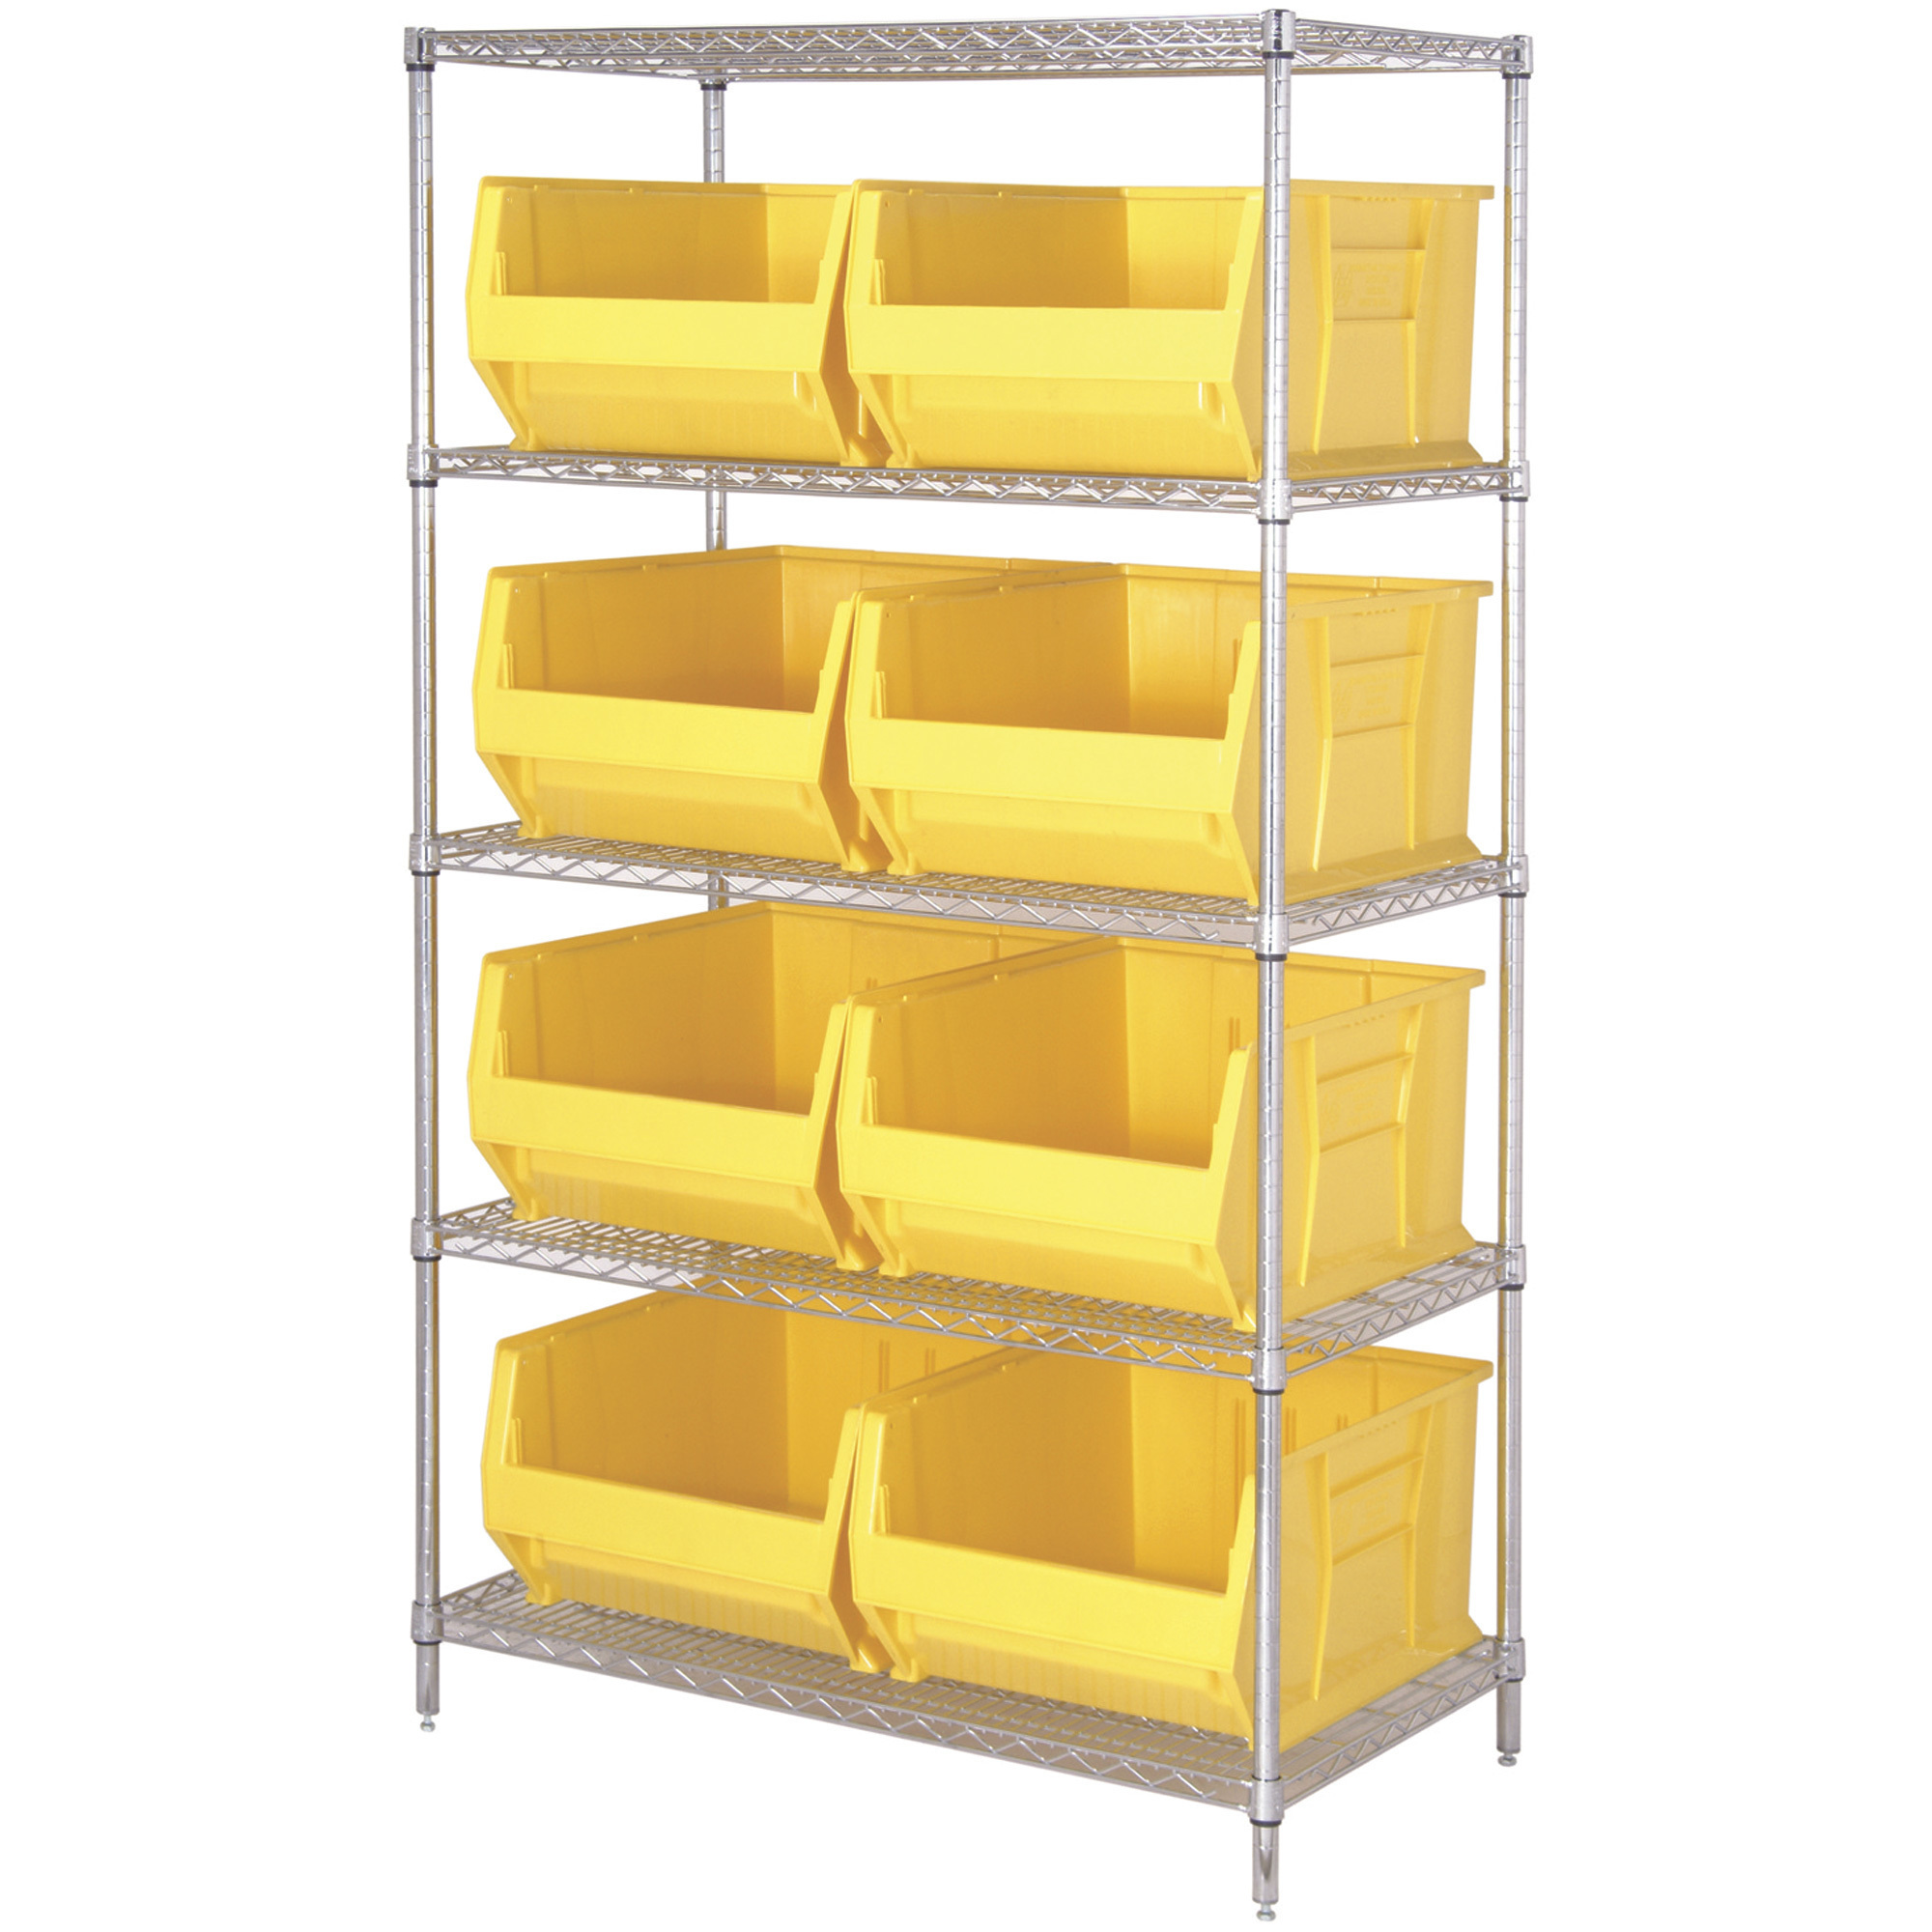 Shelf Bin Shelving Systems, Shelf Bin Systems, Shelf Bin Units, Plastic  Shelf Bins